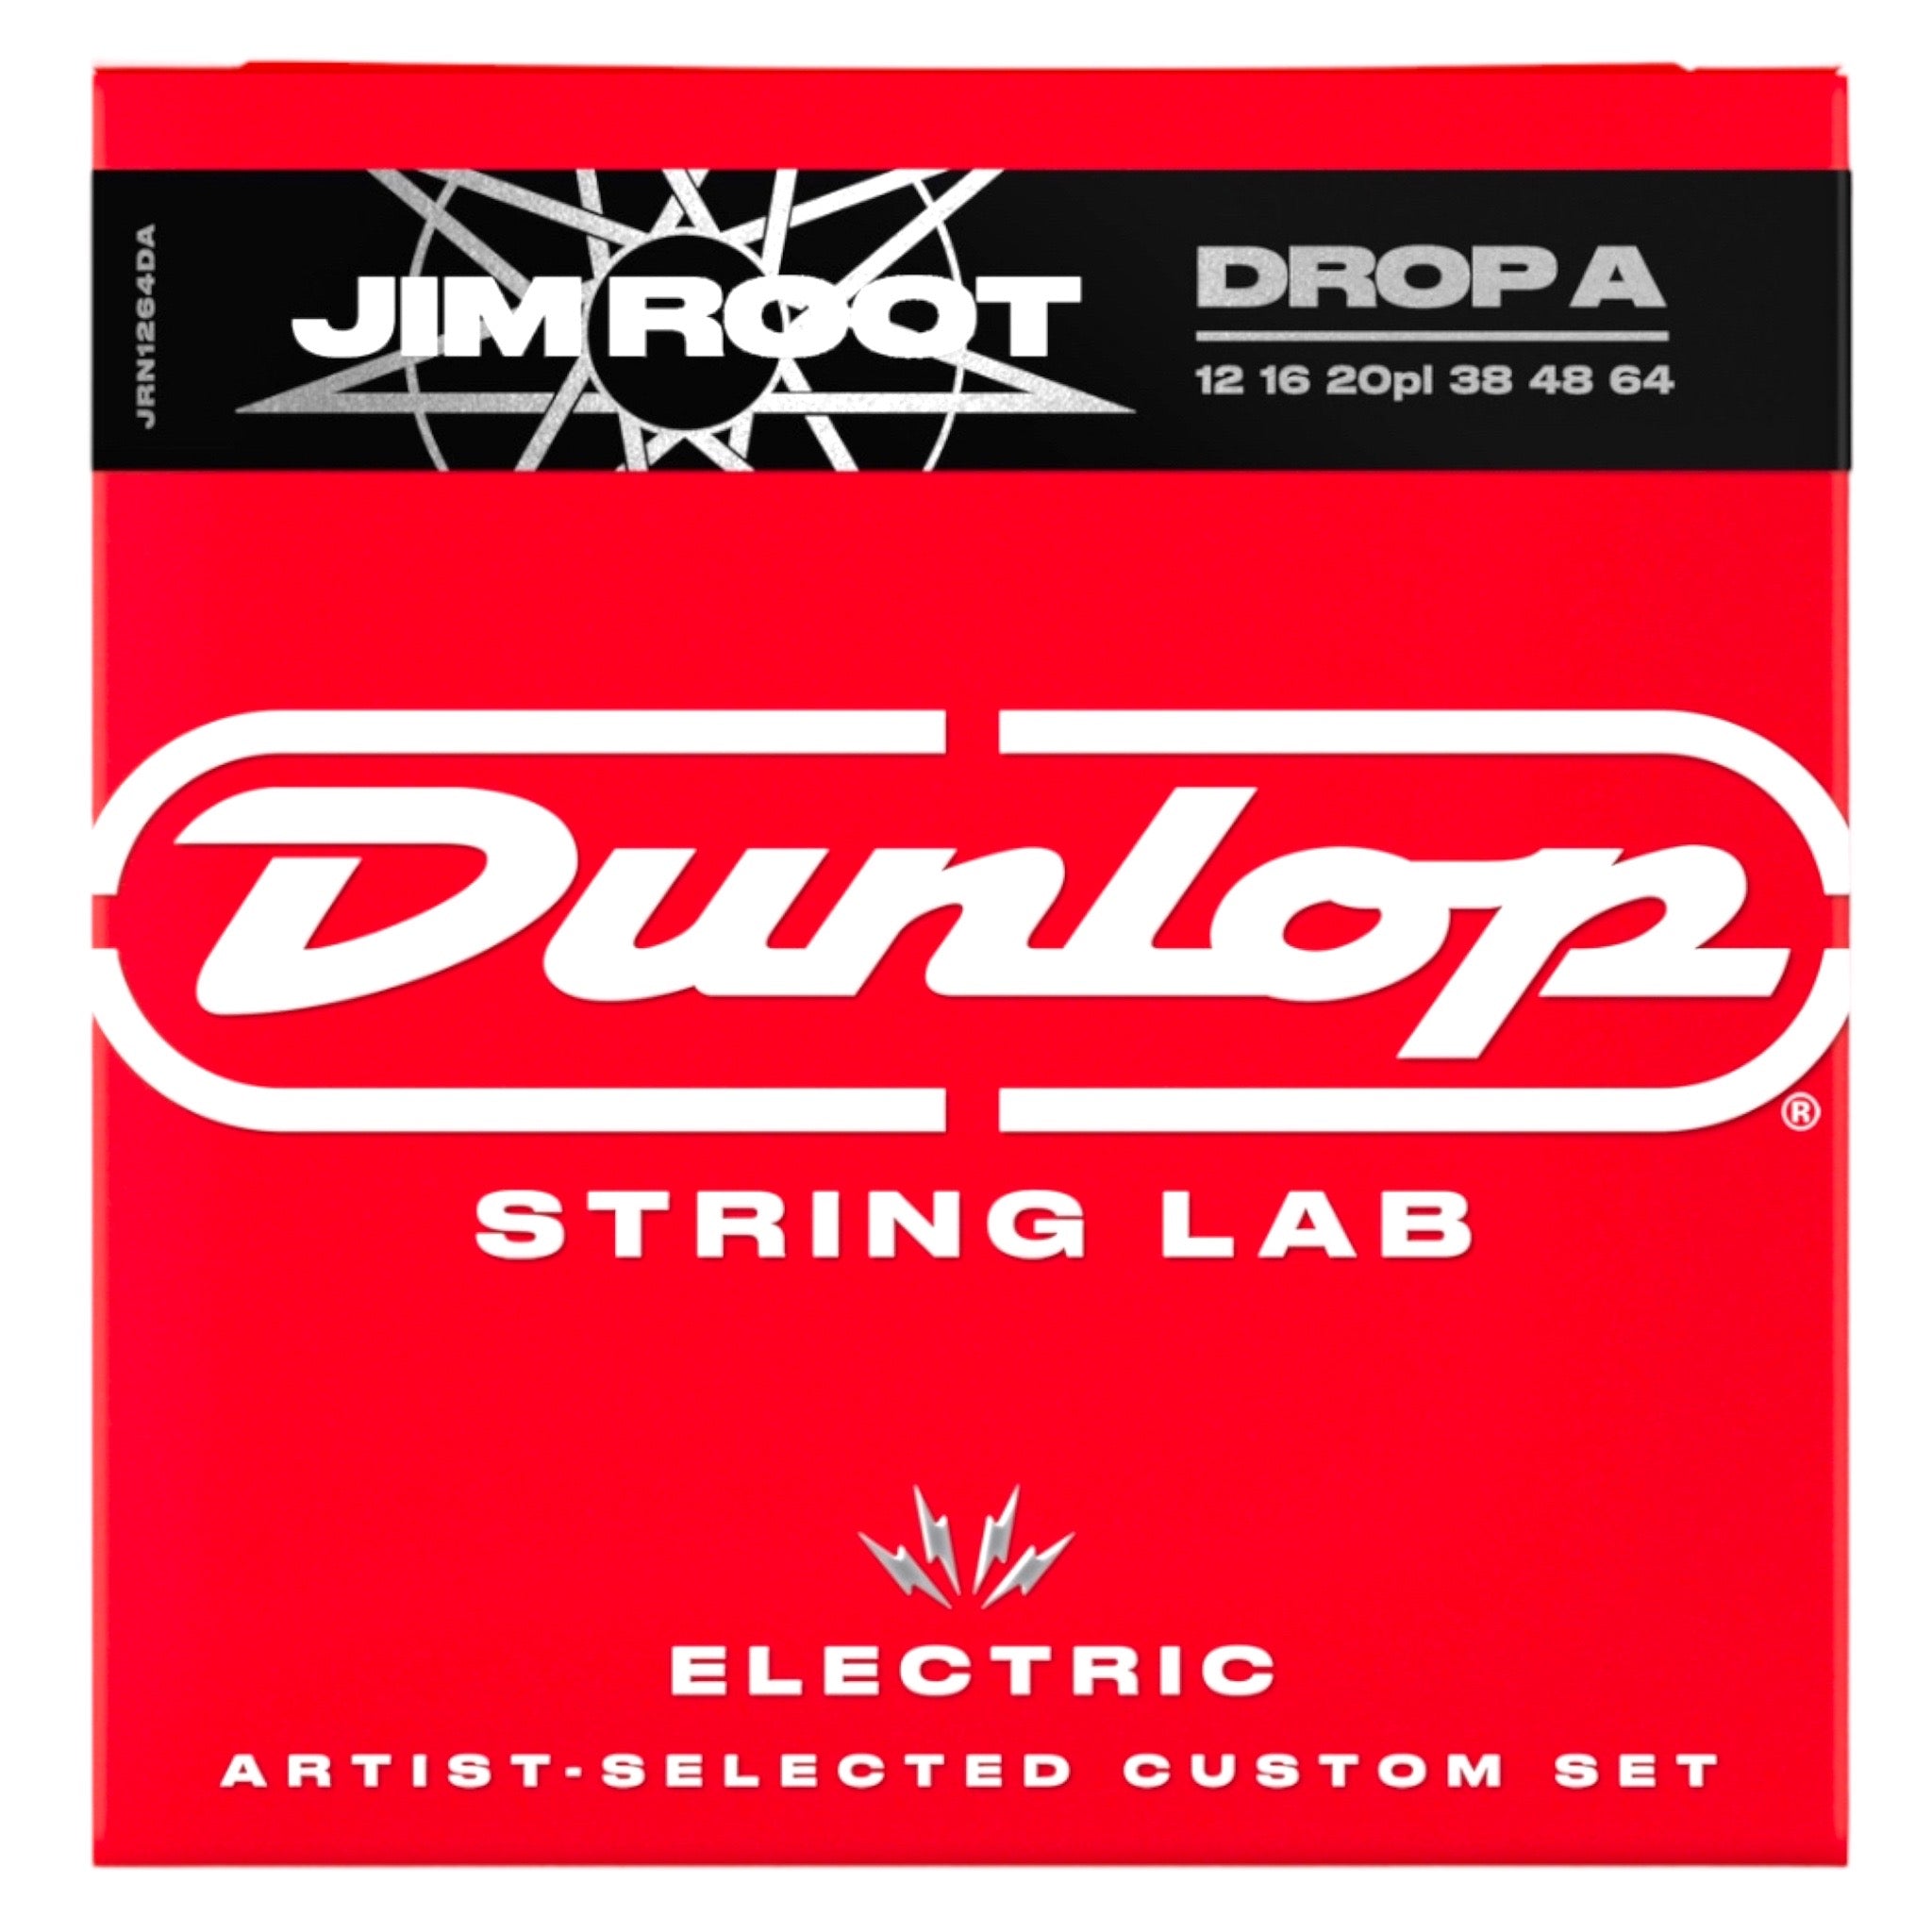 Jim Dunlop Lab Series Jim Root Drop A Electric Guitar Strings (12/64)